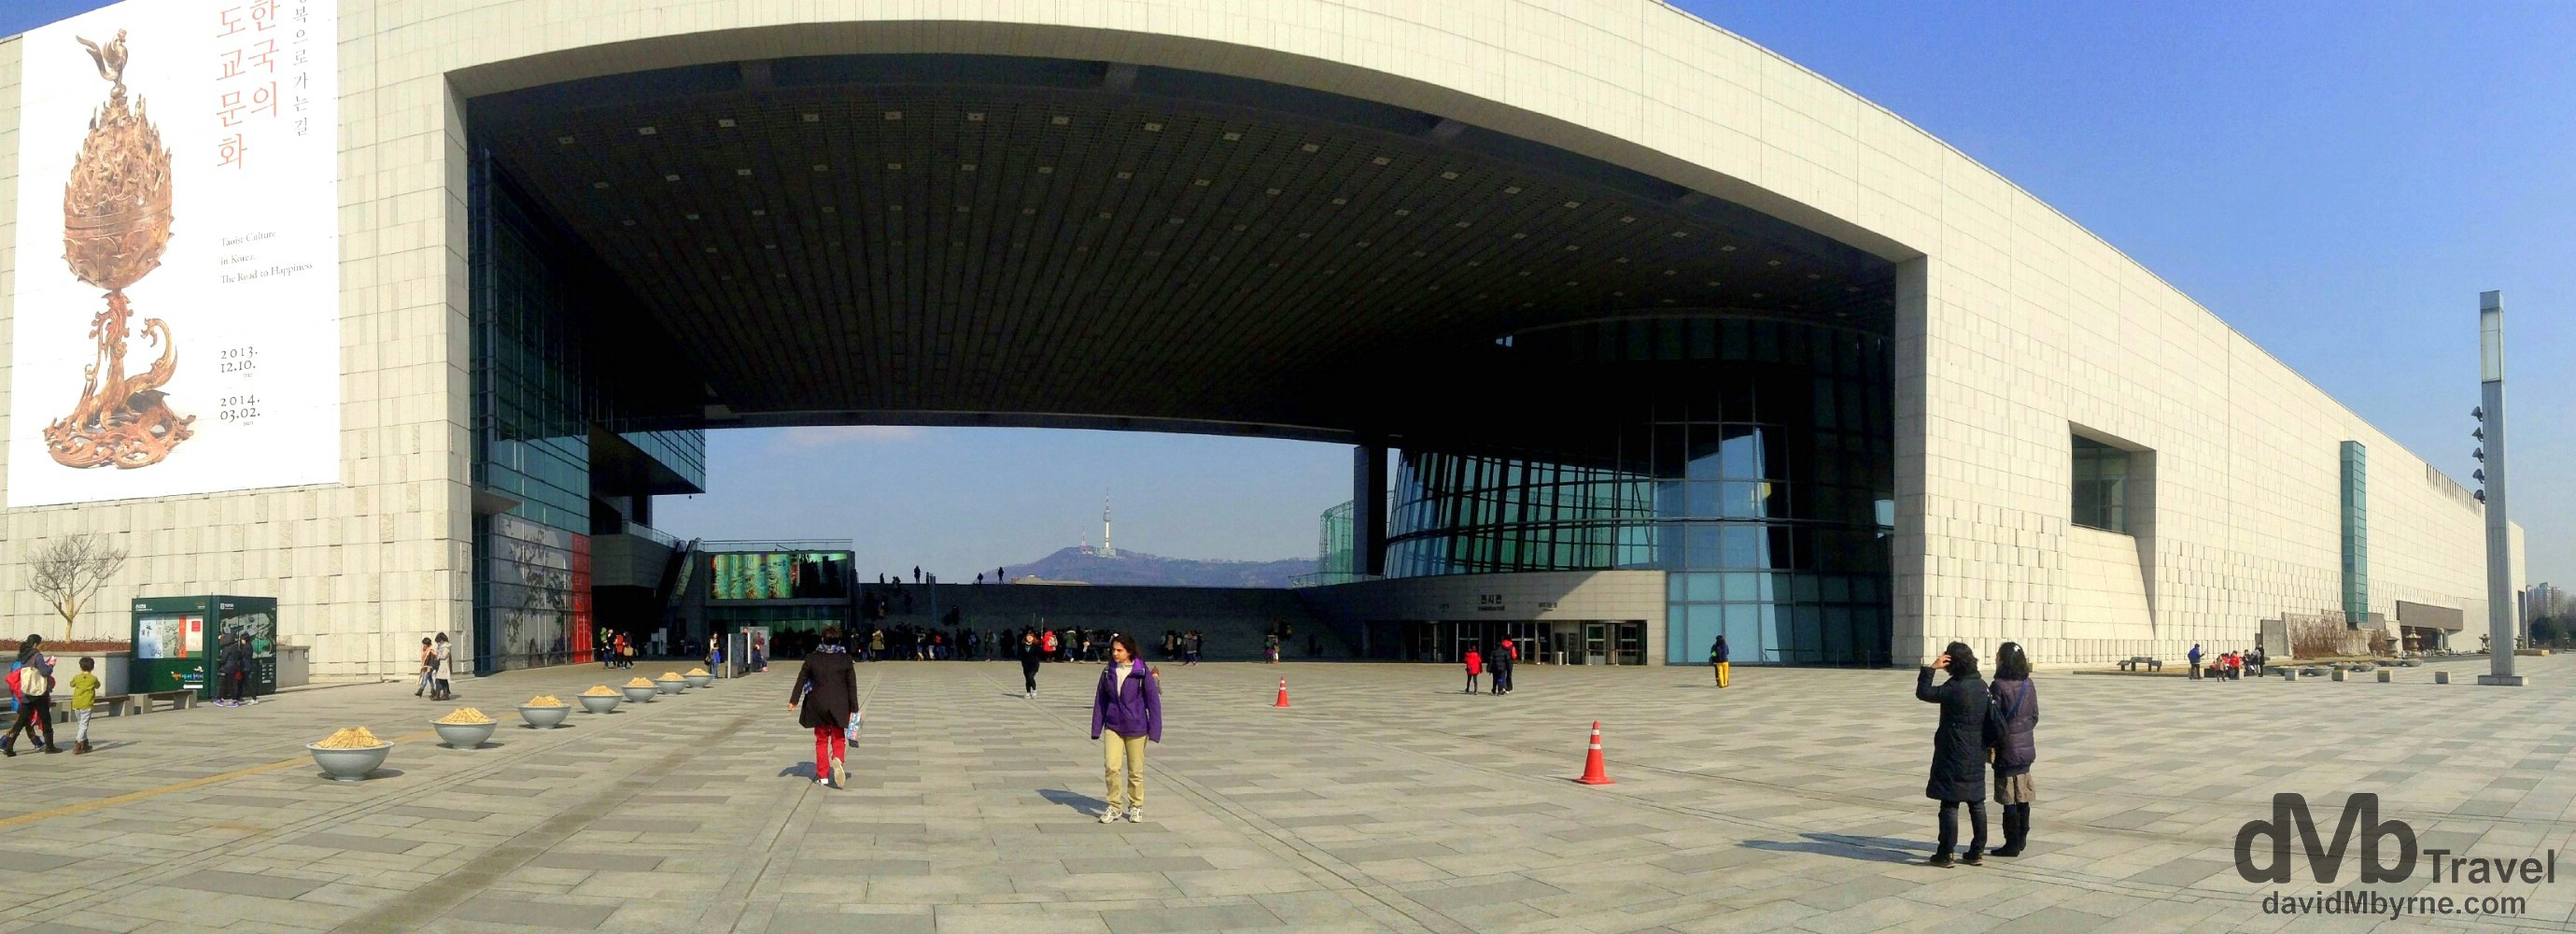 National Museum of Korea, Seoul, South Korea